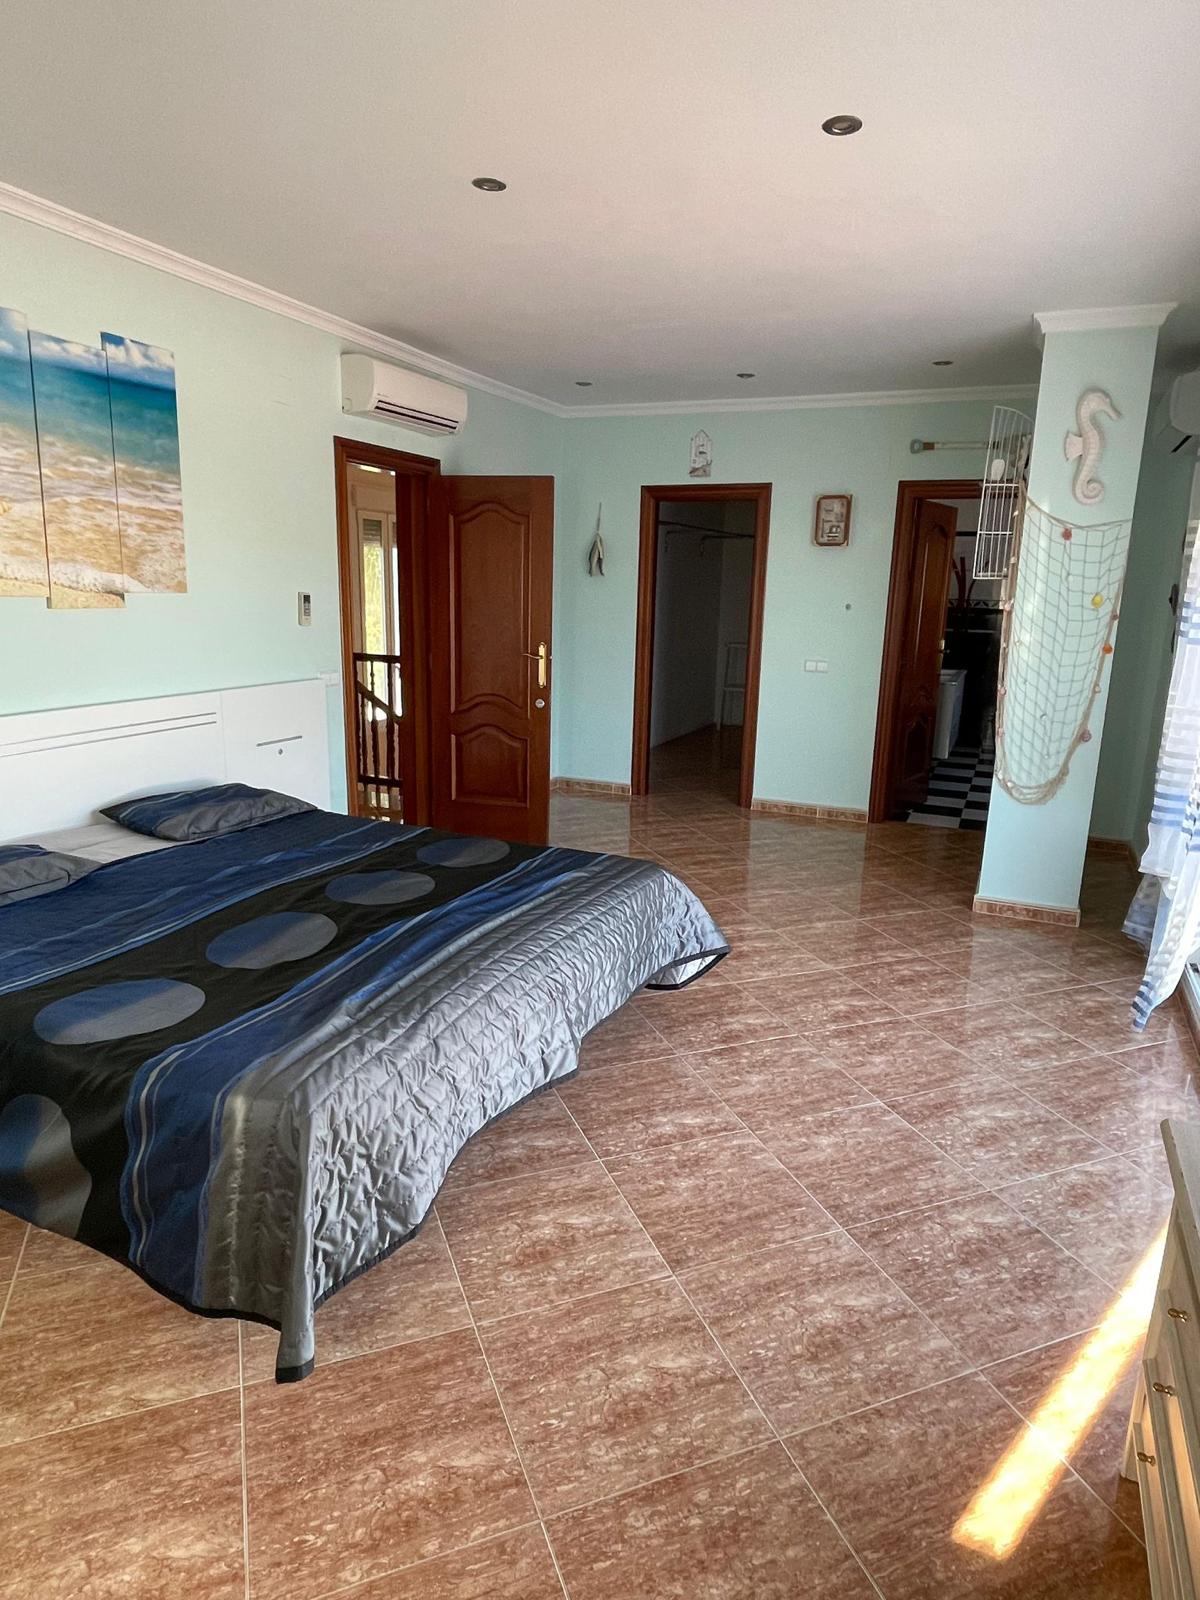 Detached house for rent in Partida Garduix